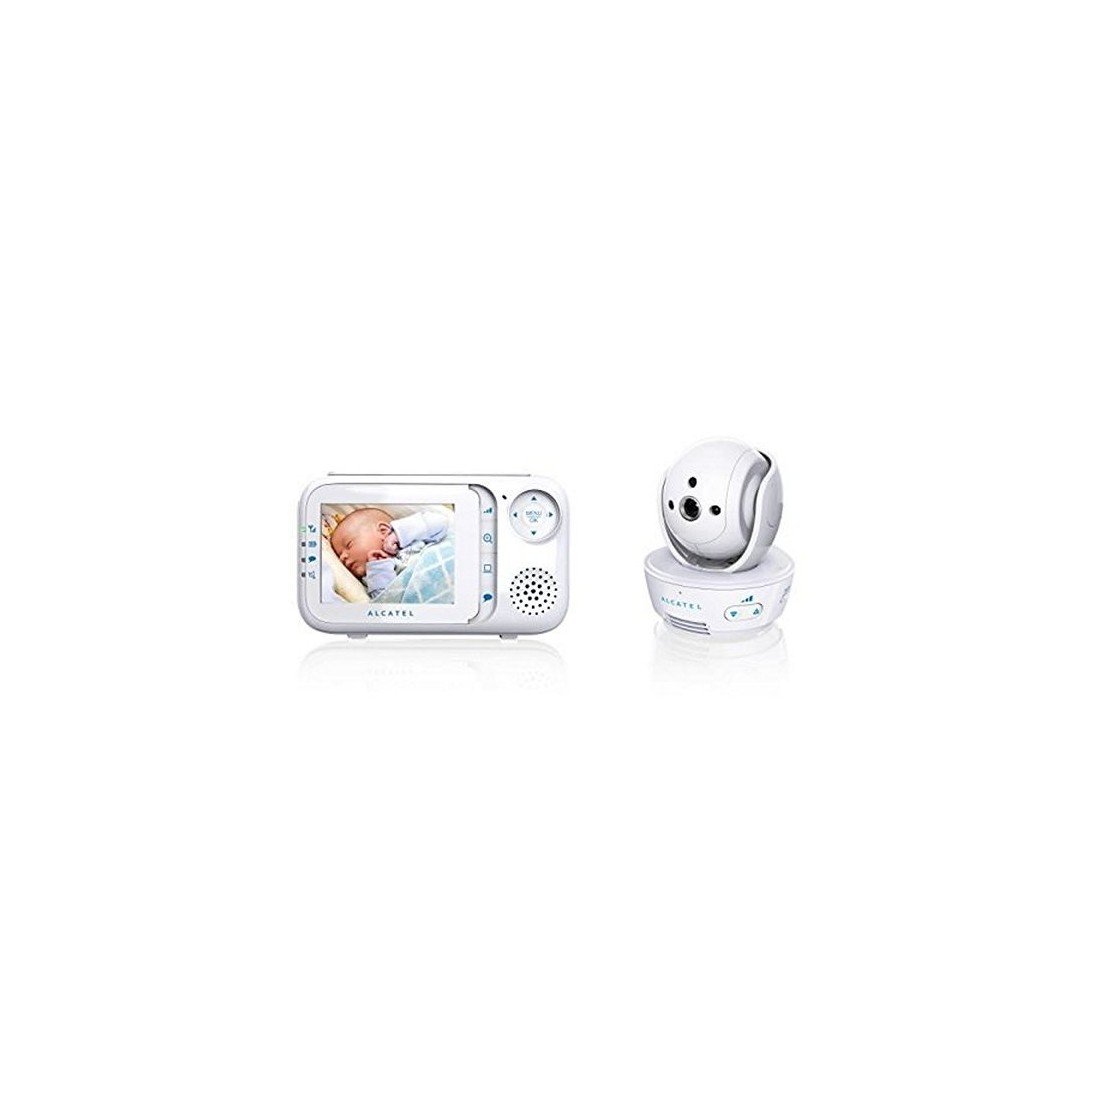 Alcatel Baby Link 710 – Baby Monitor